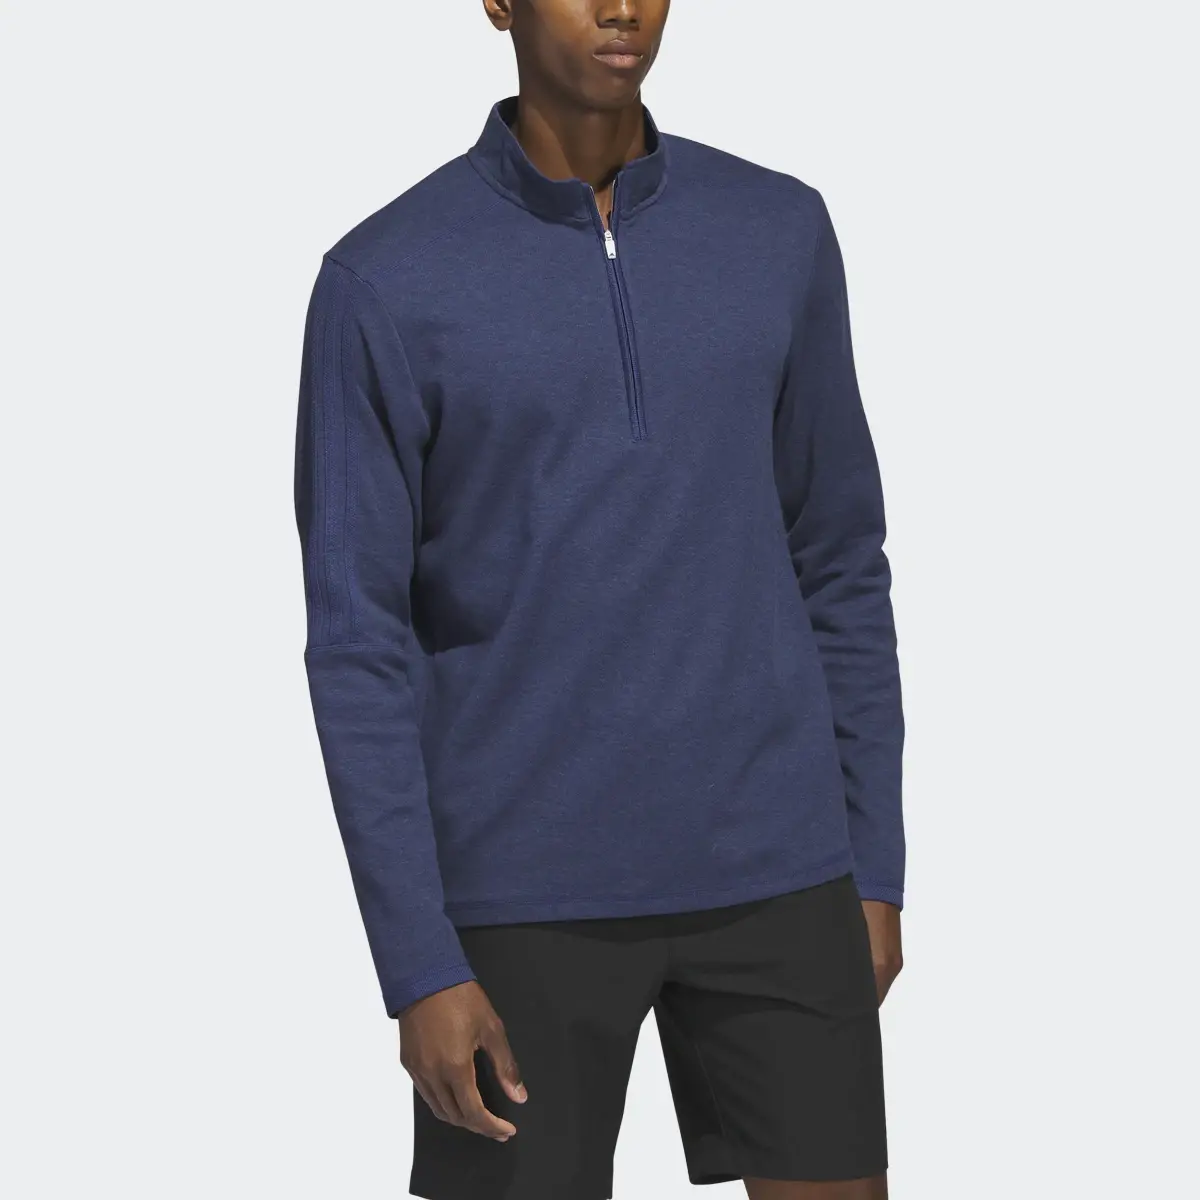 Adidas 3-Stripes Quarter-Zip Pullover. 1